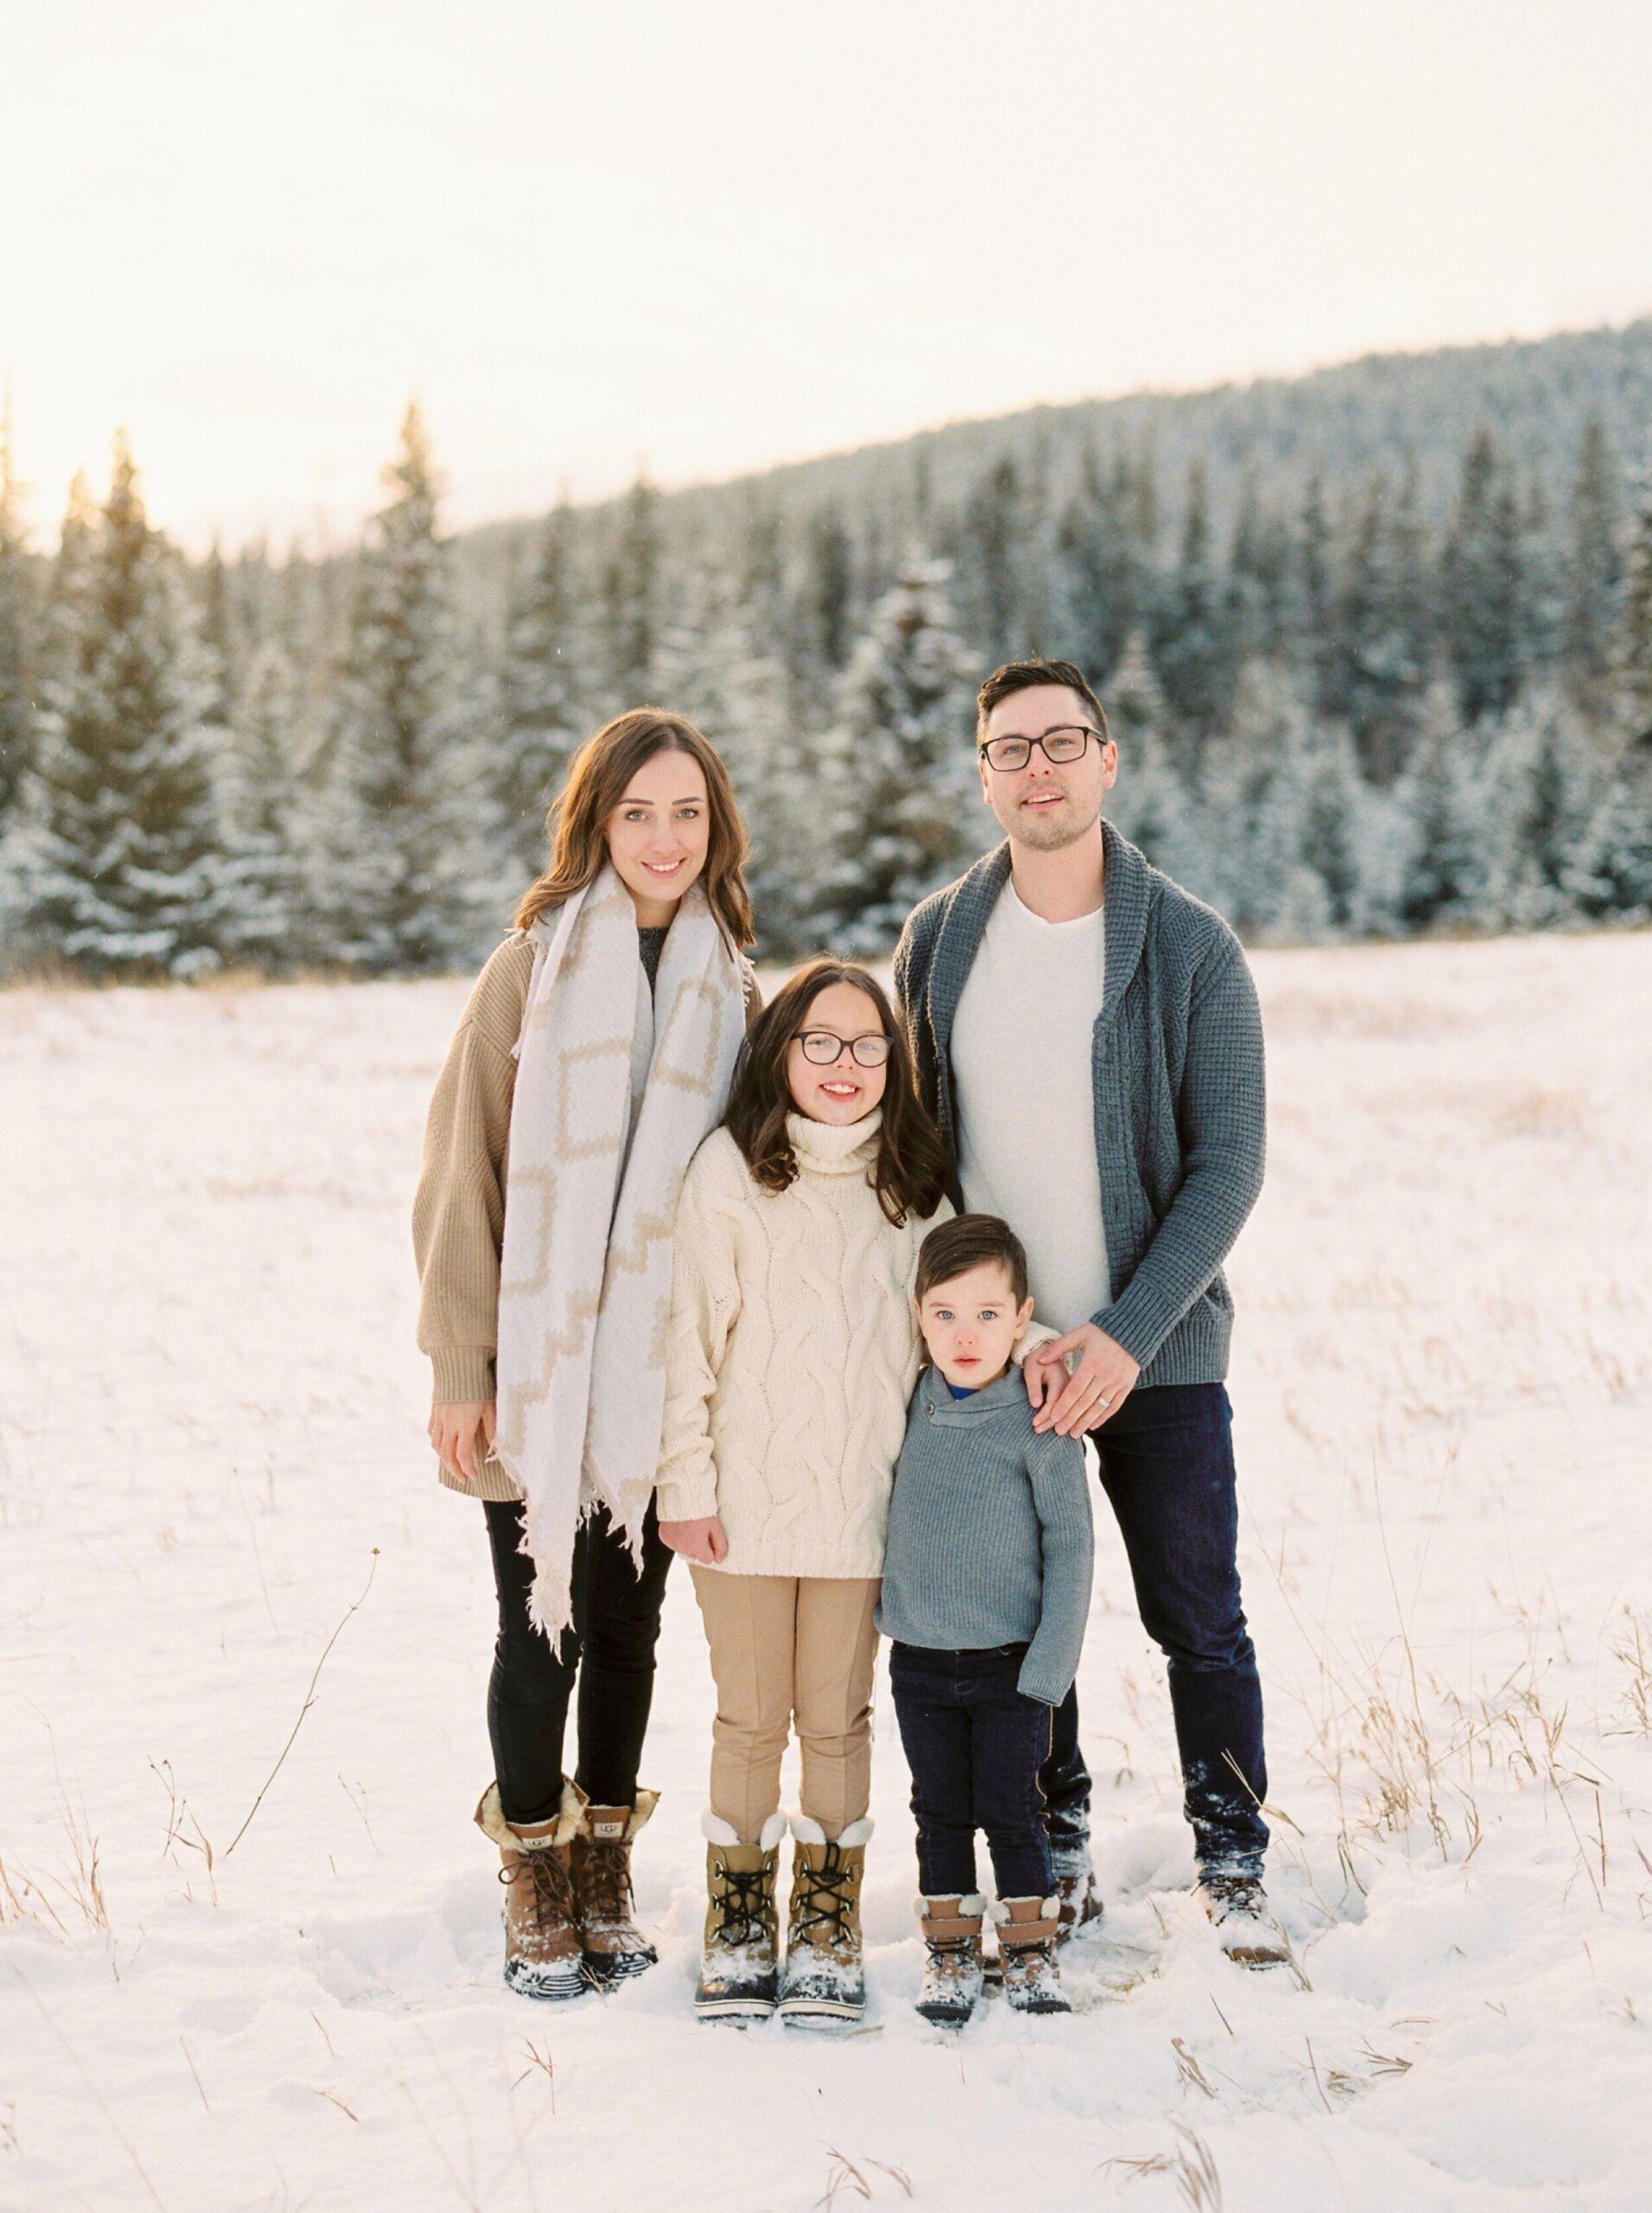  Winter family portraits | fine art film photographer Justine Milton Photography 